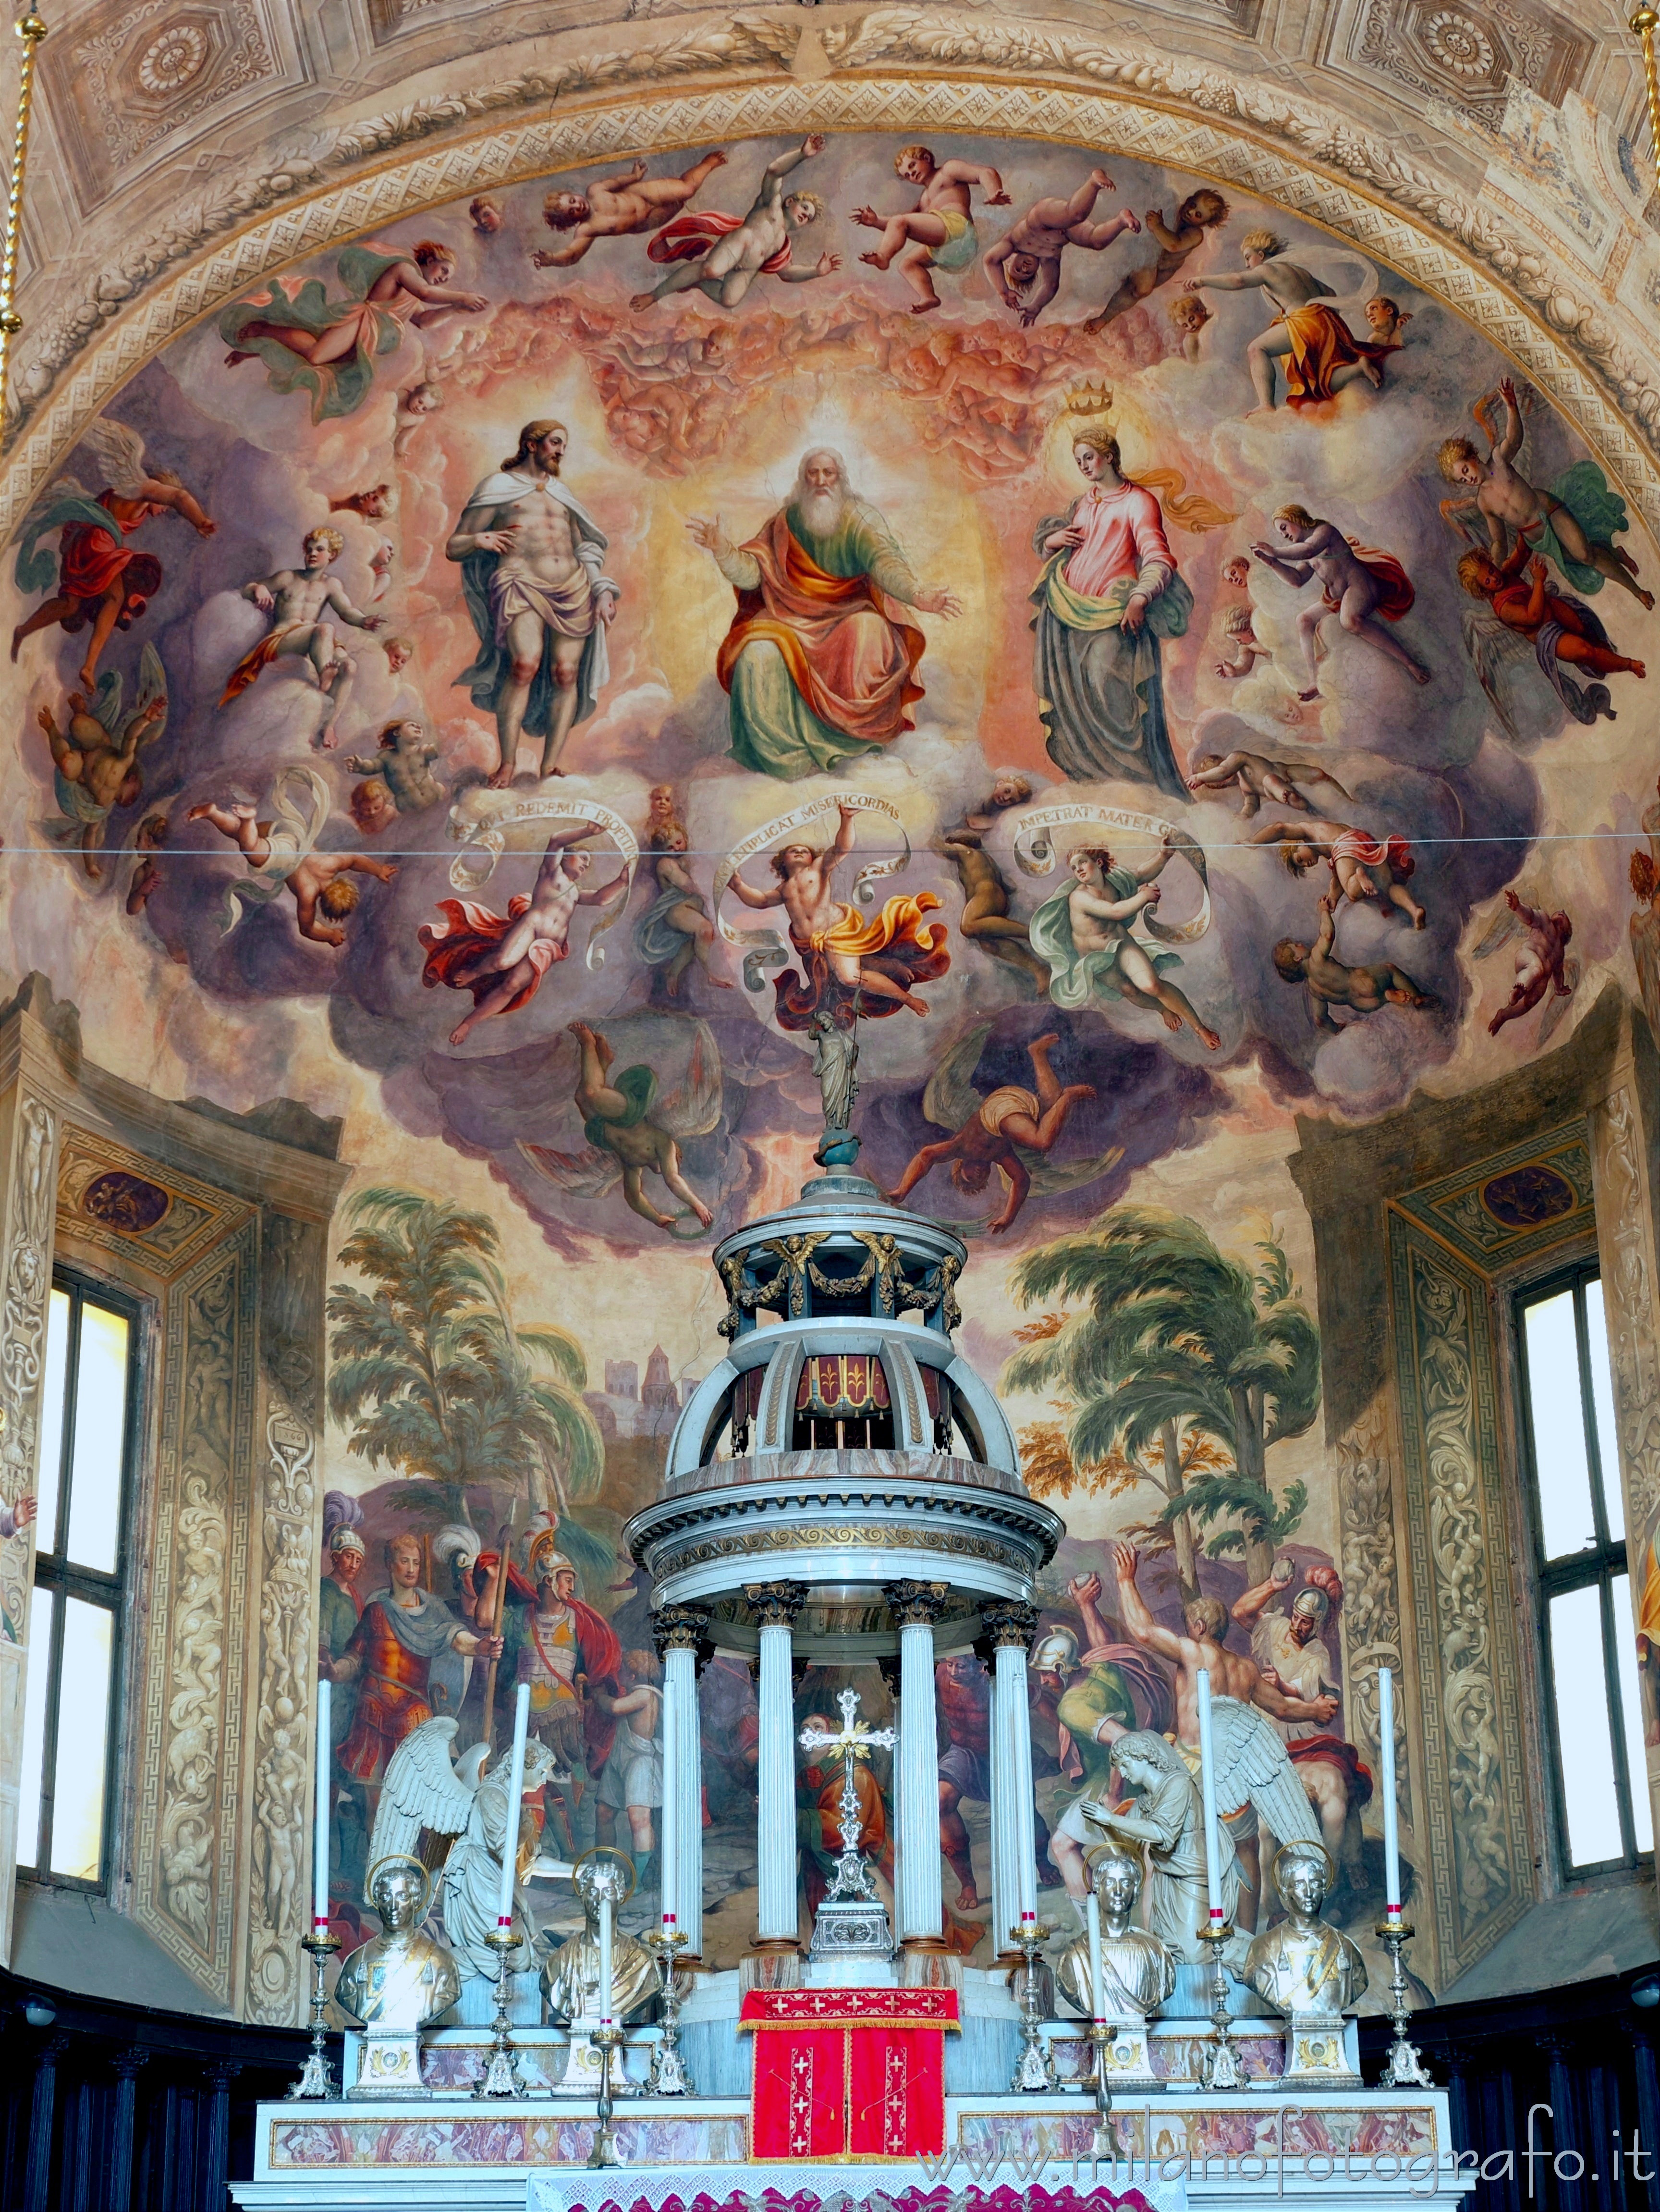 Vimercate (Monza e Brianza, Italy): Interior of the central apse of the the Church of Santo Stefano - Vimercate (Monza e Brianza, Italy)